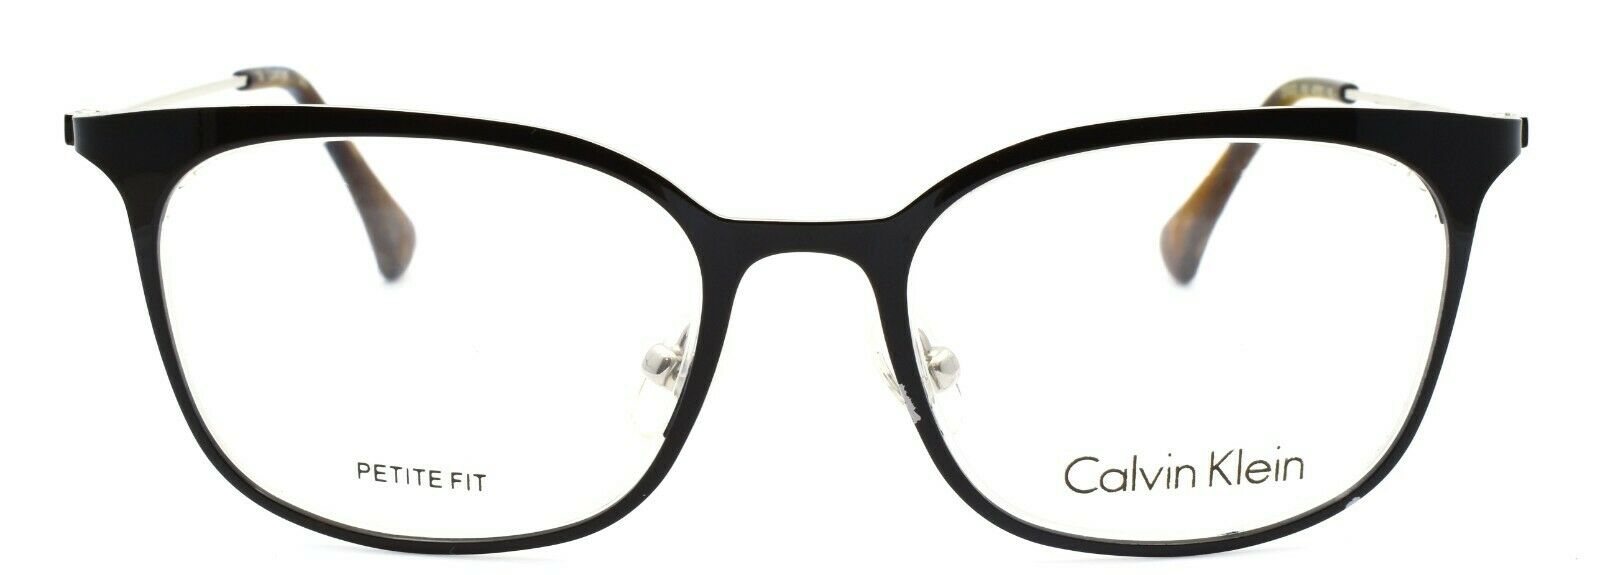 2-Calvin Klein CK5432 001 Eyeglasses Frames PETITE 47-17-135 Black-750779100912-IKSpecs